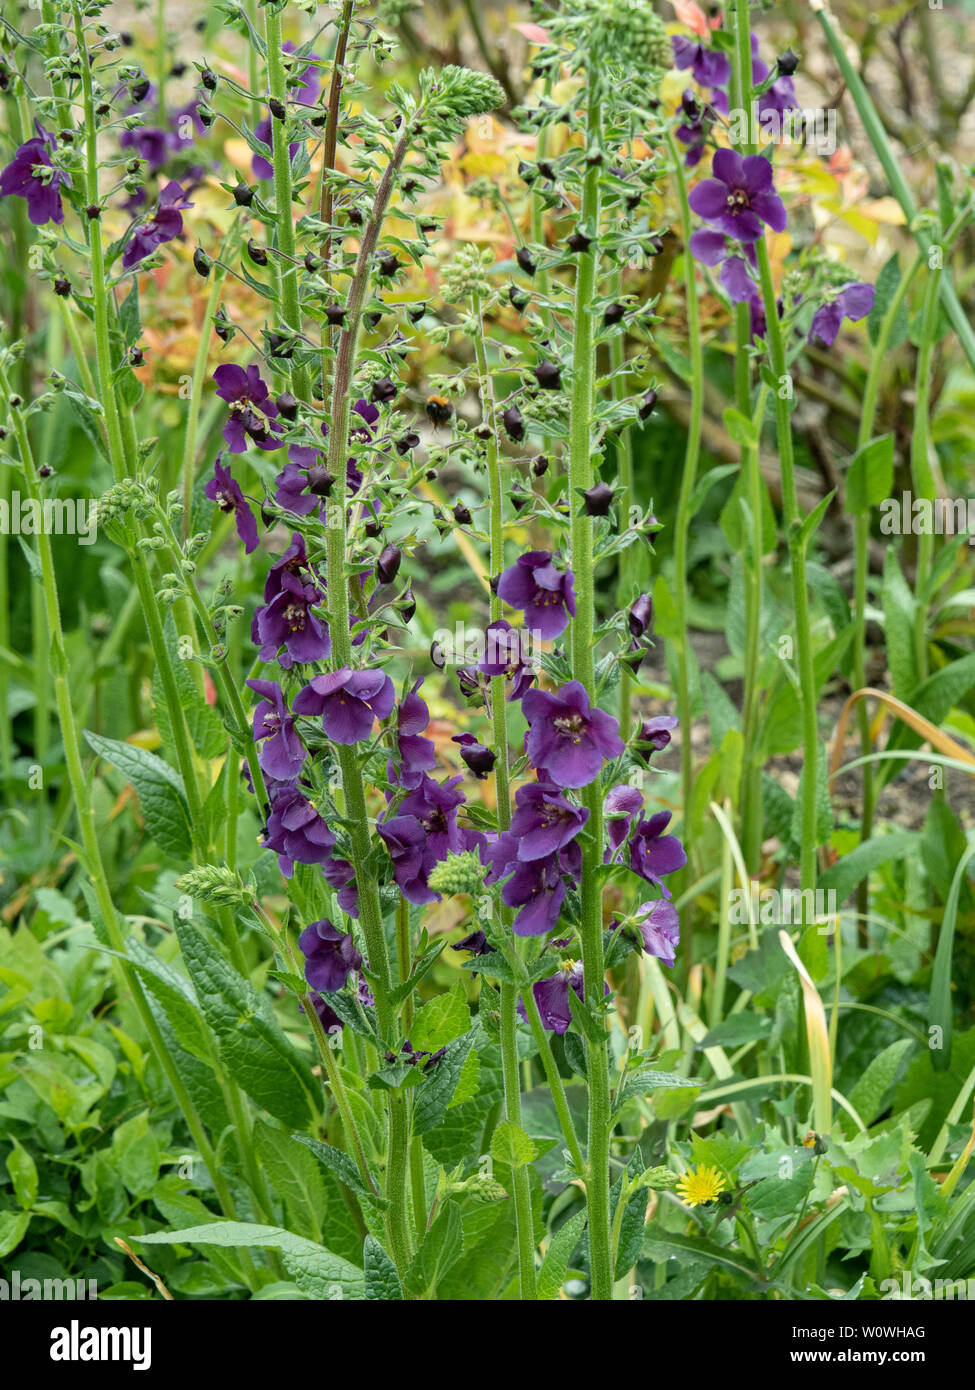 A group of Verbascum phoenicum Violetta showing the deep purple flower spikes Stock Photo